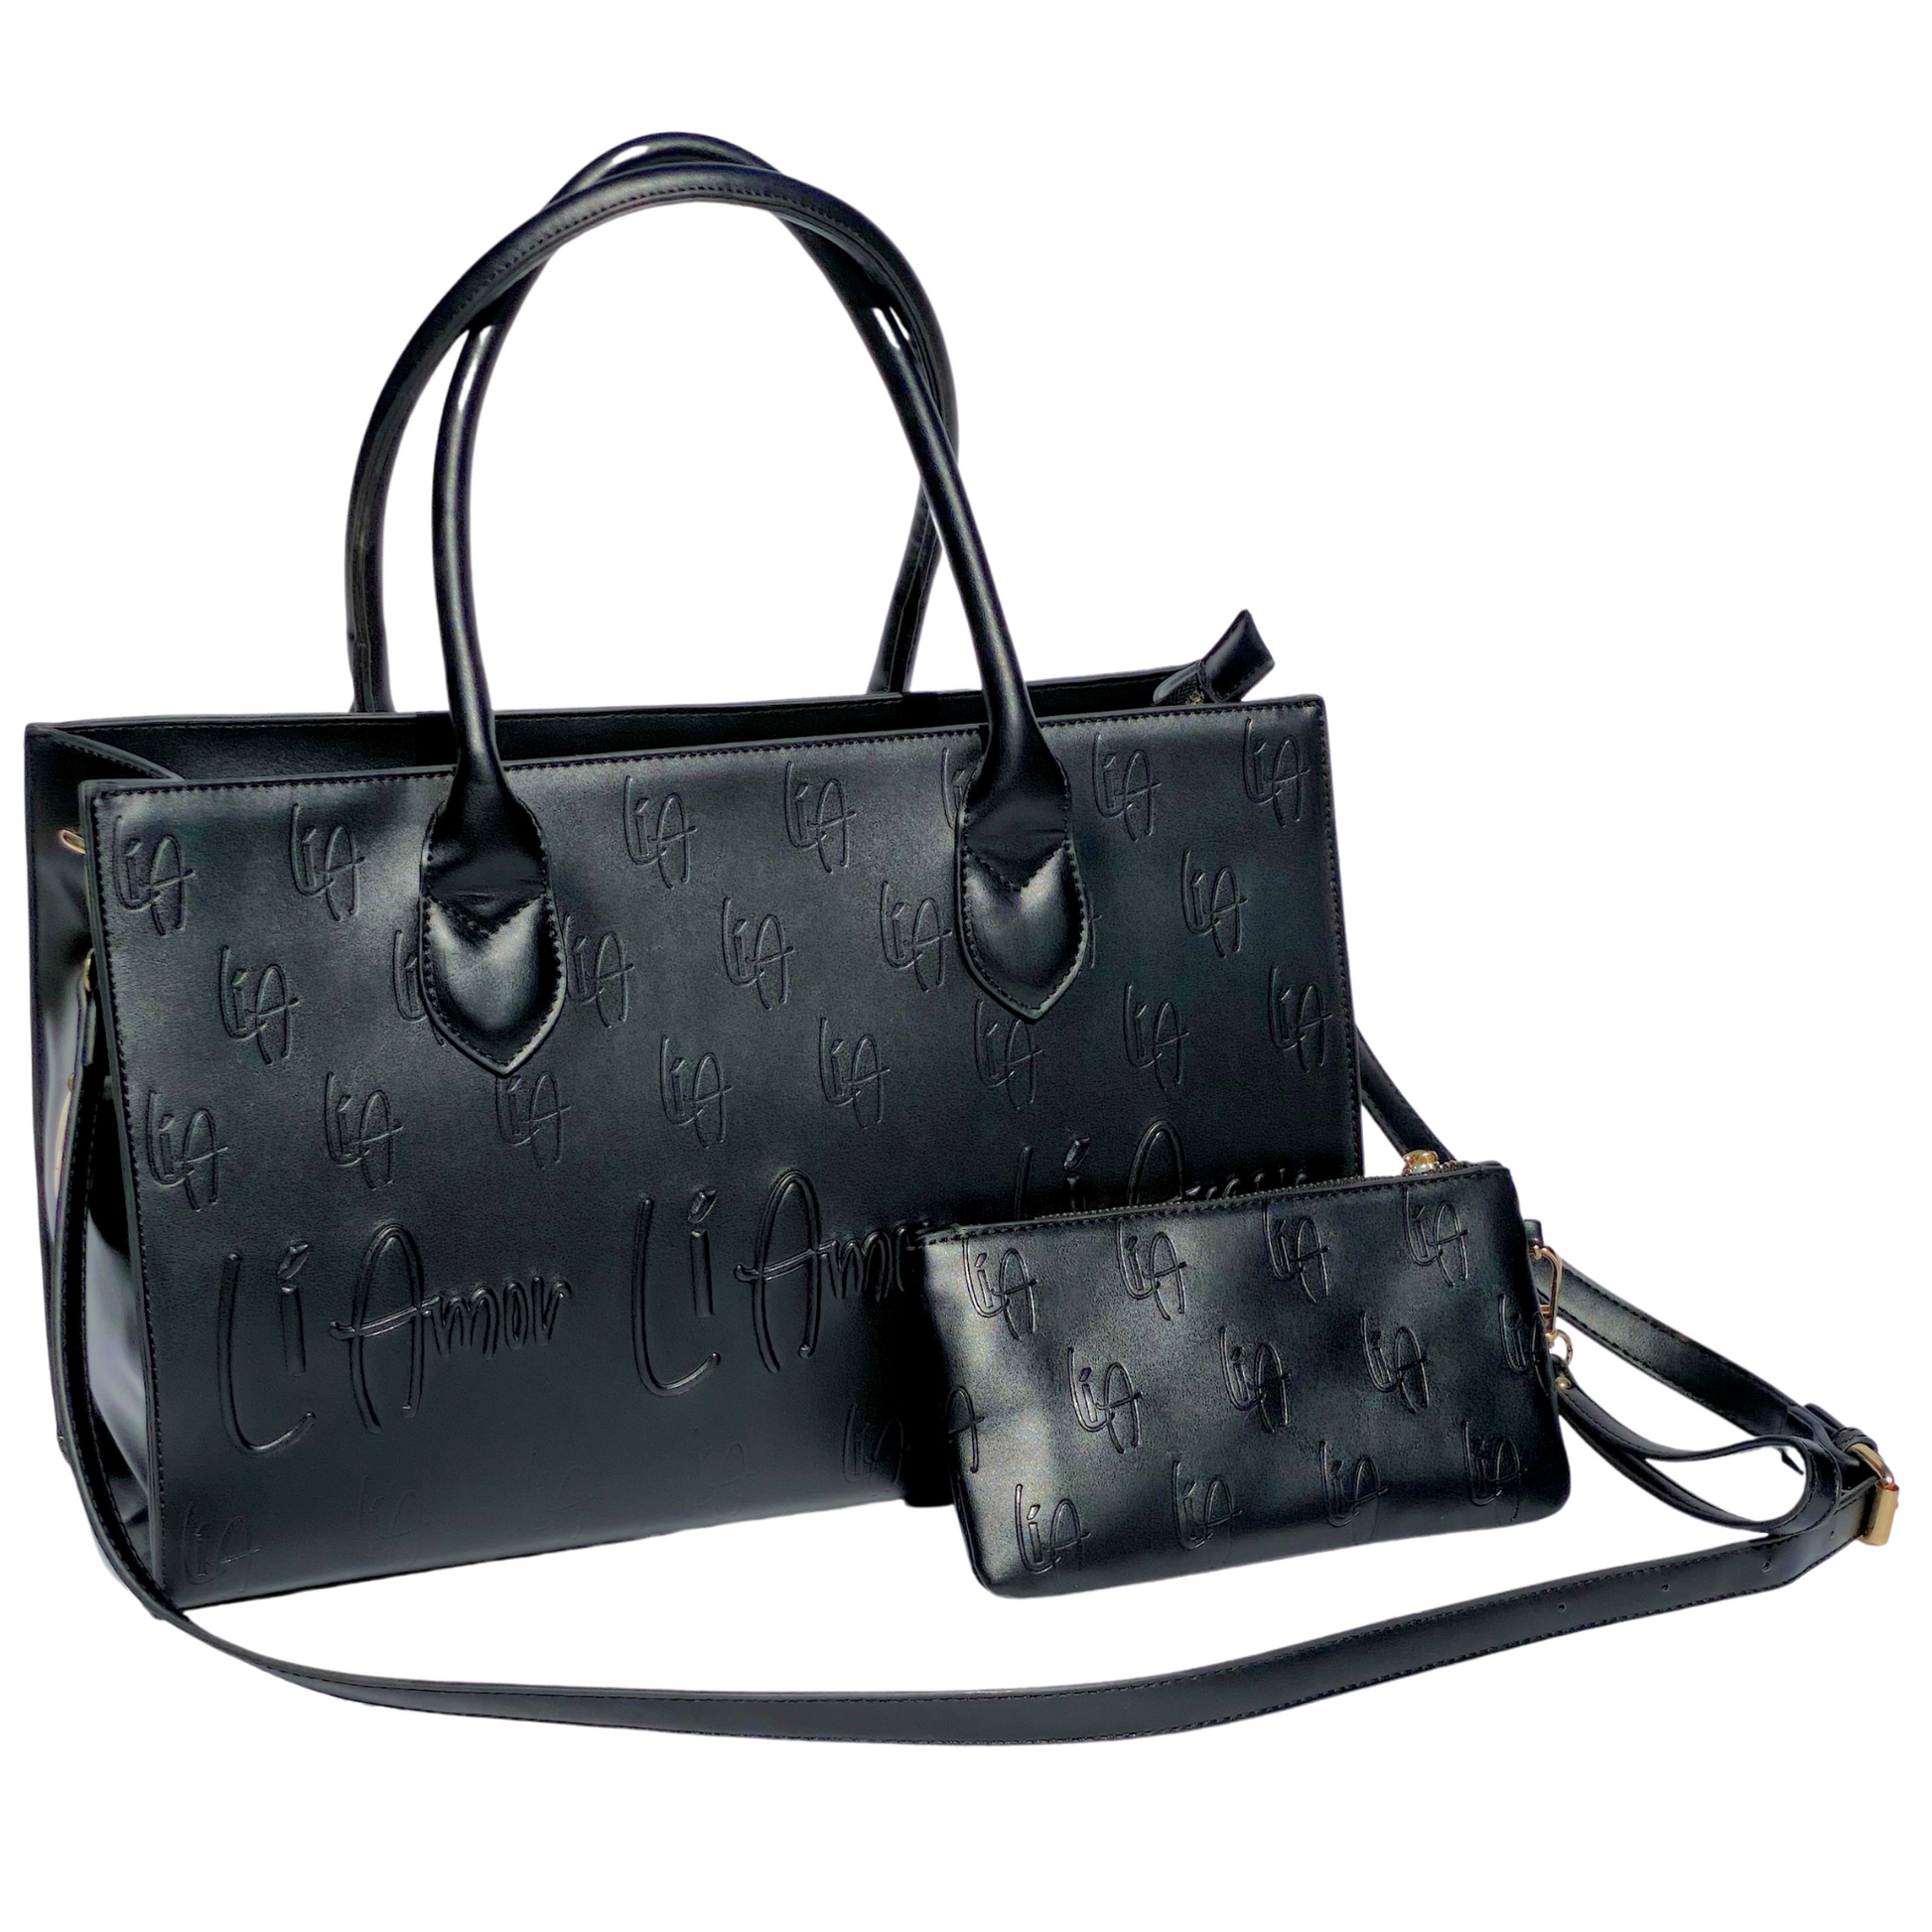 Vegan Leather Handbag, Vegan Leather Purse